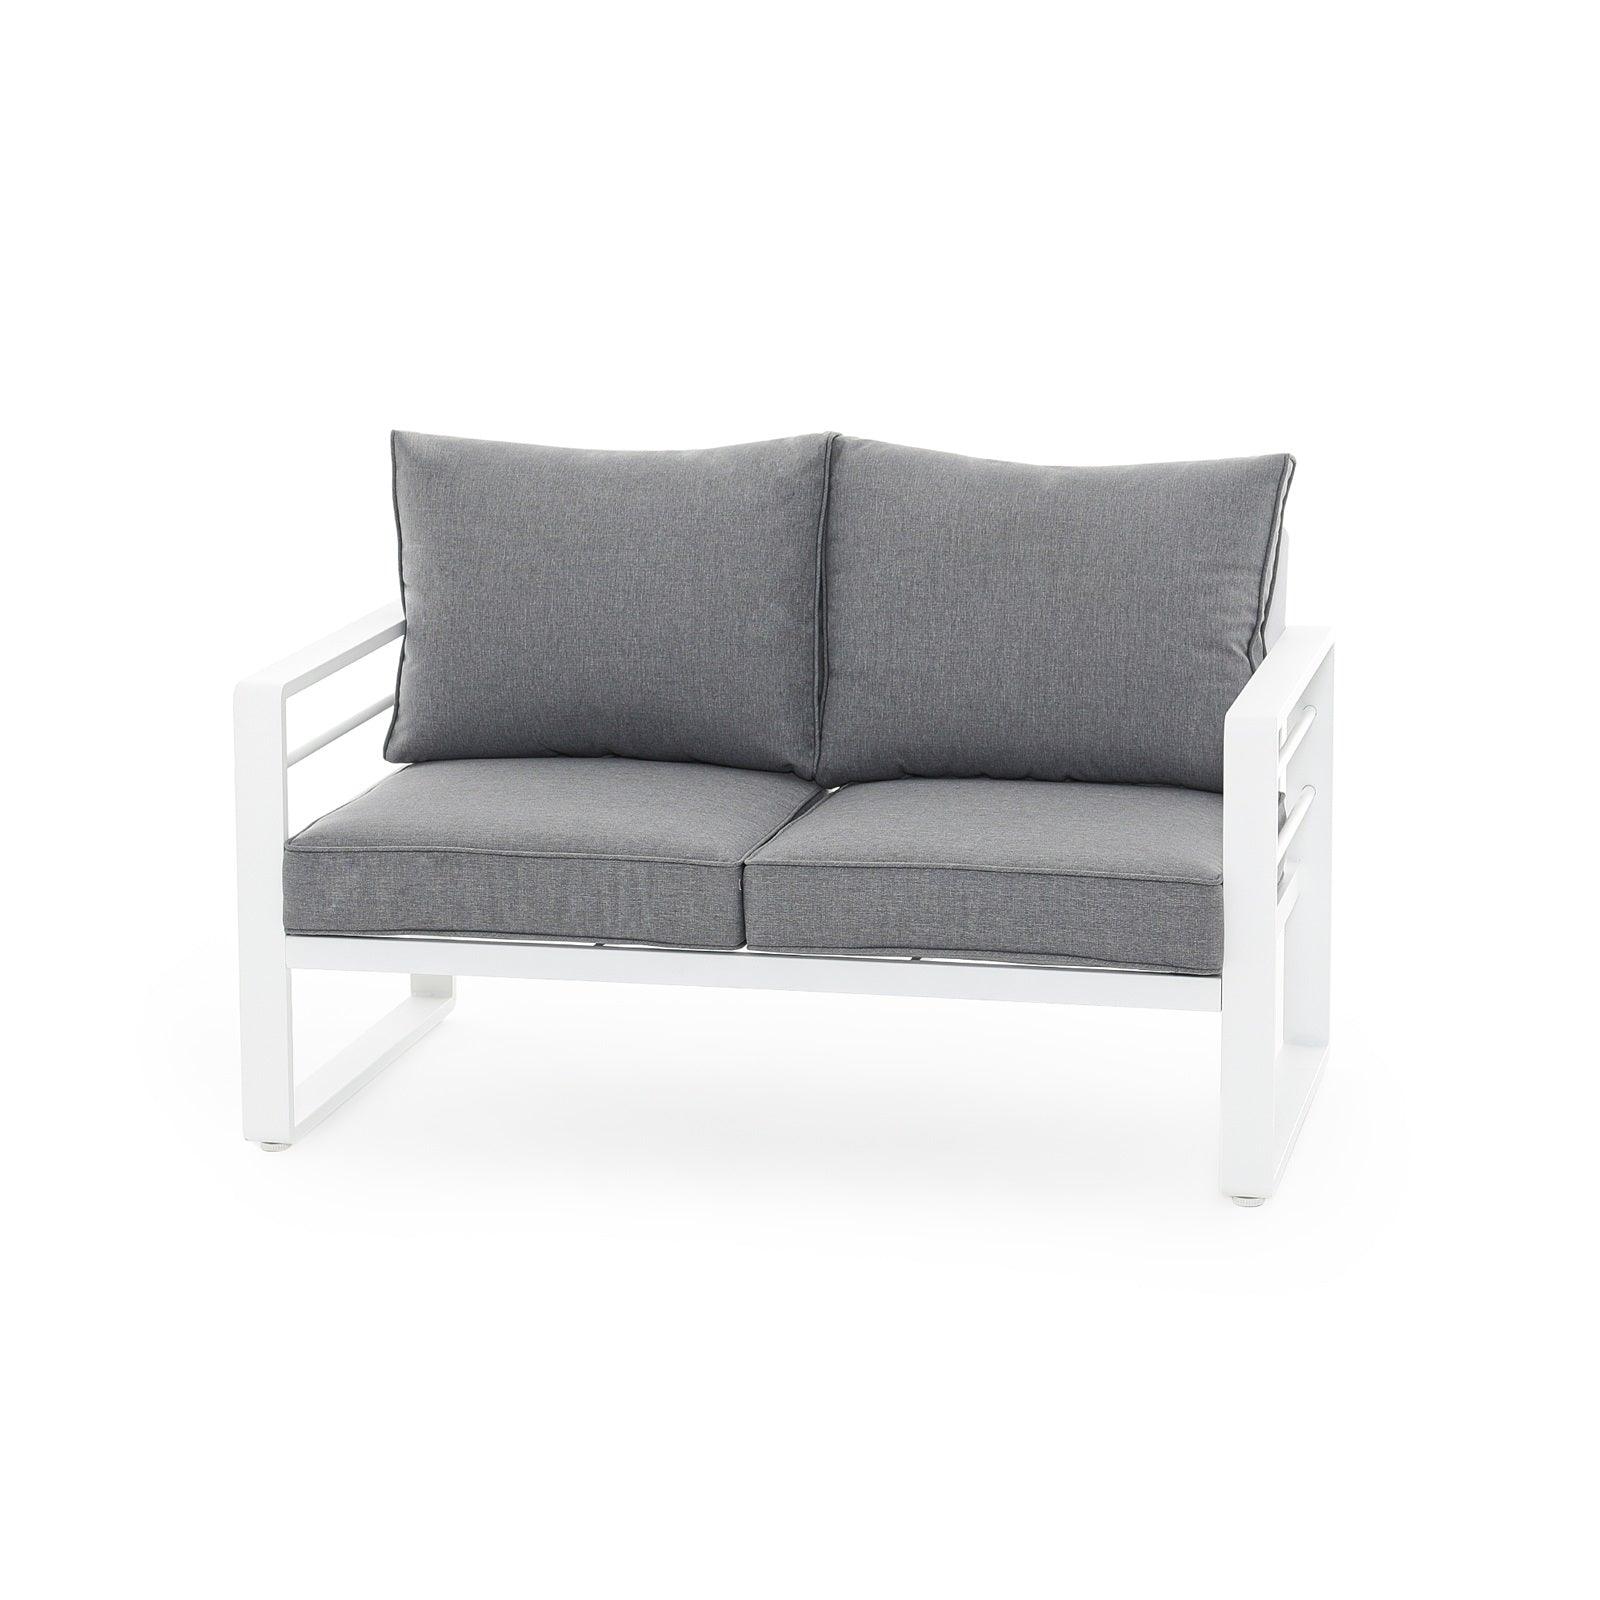 Salina outdoor loveseat with white aluminum frame finish, grey cushions, left - Jardina Furniture